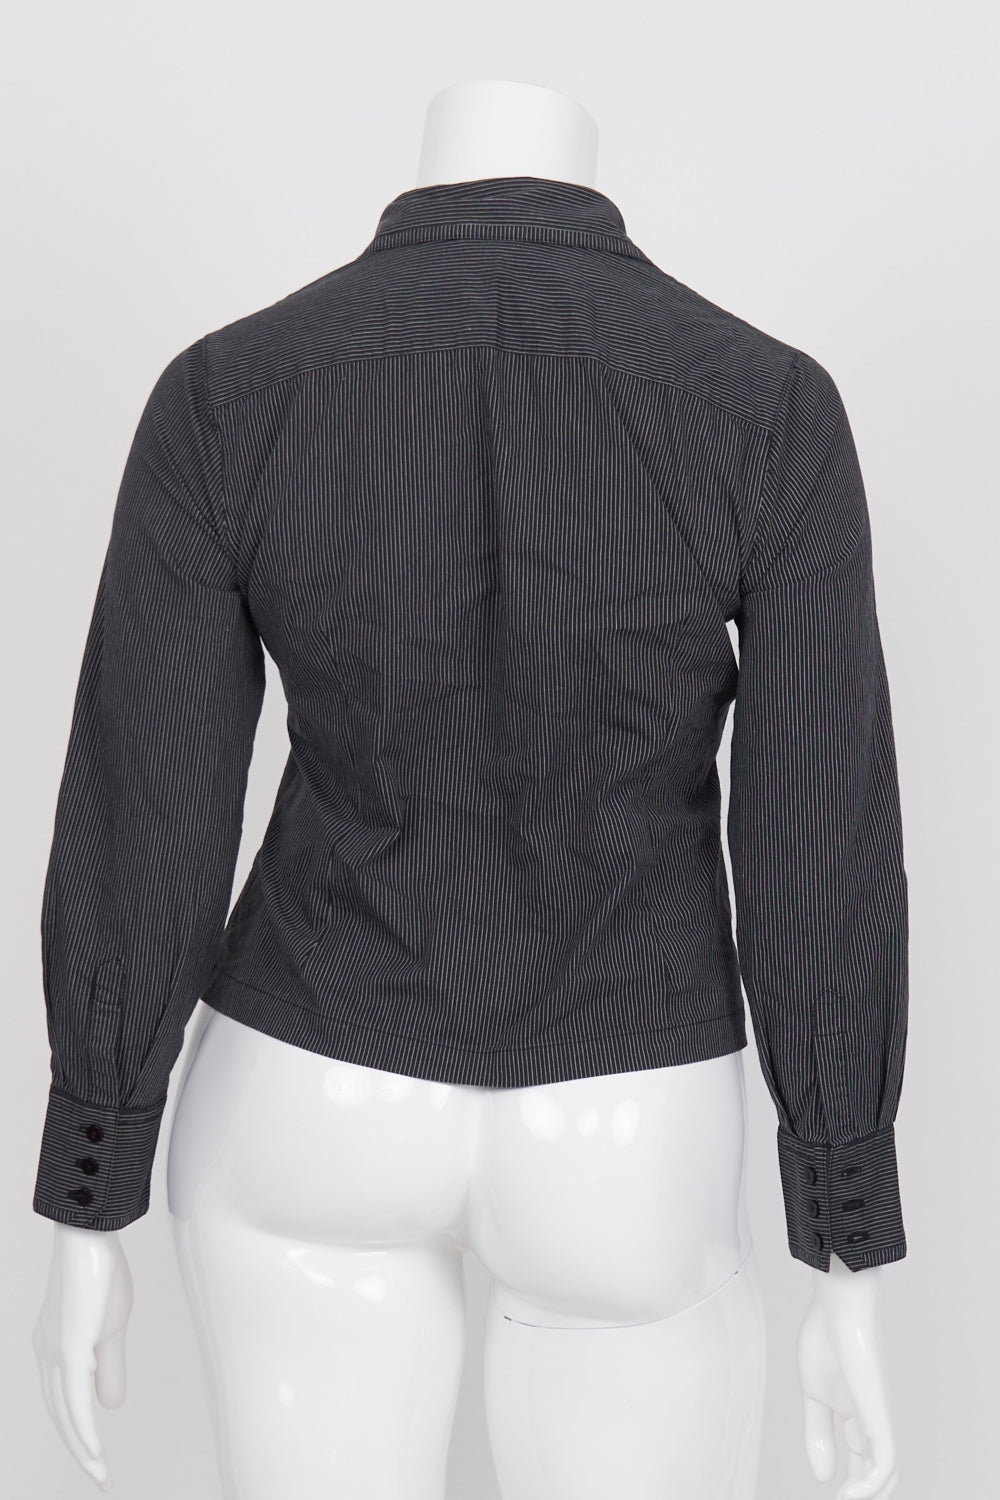 Rivette & Blair Black Striped Button-Up Shirt 16